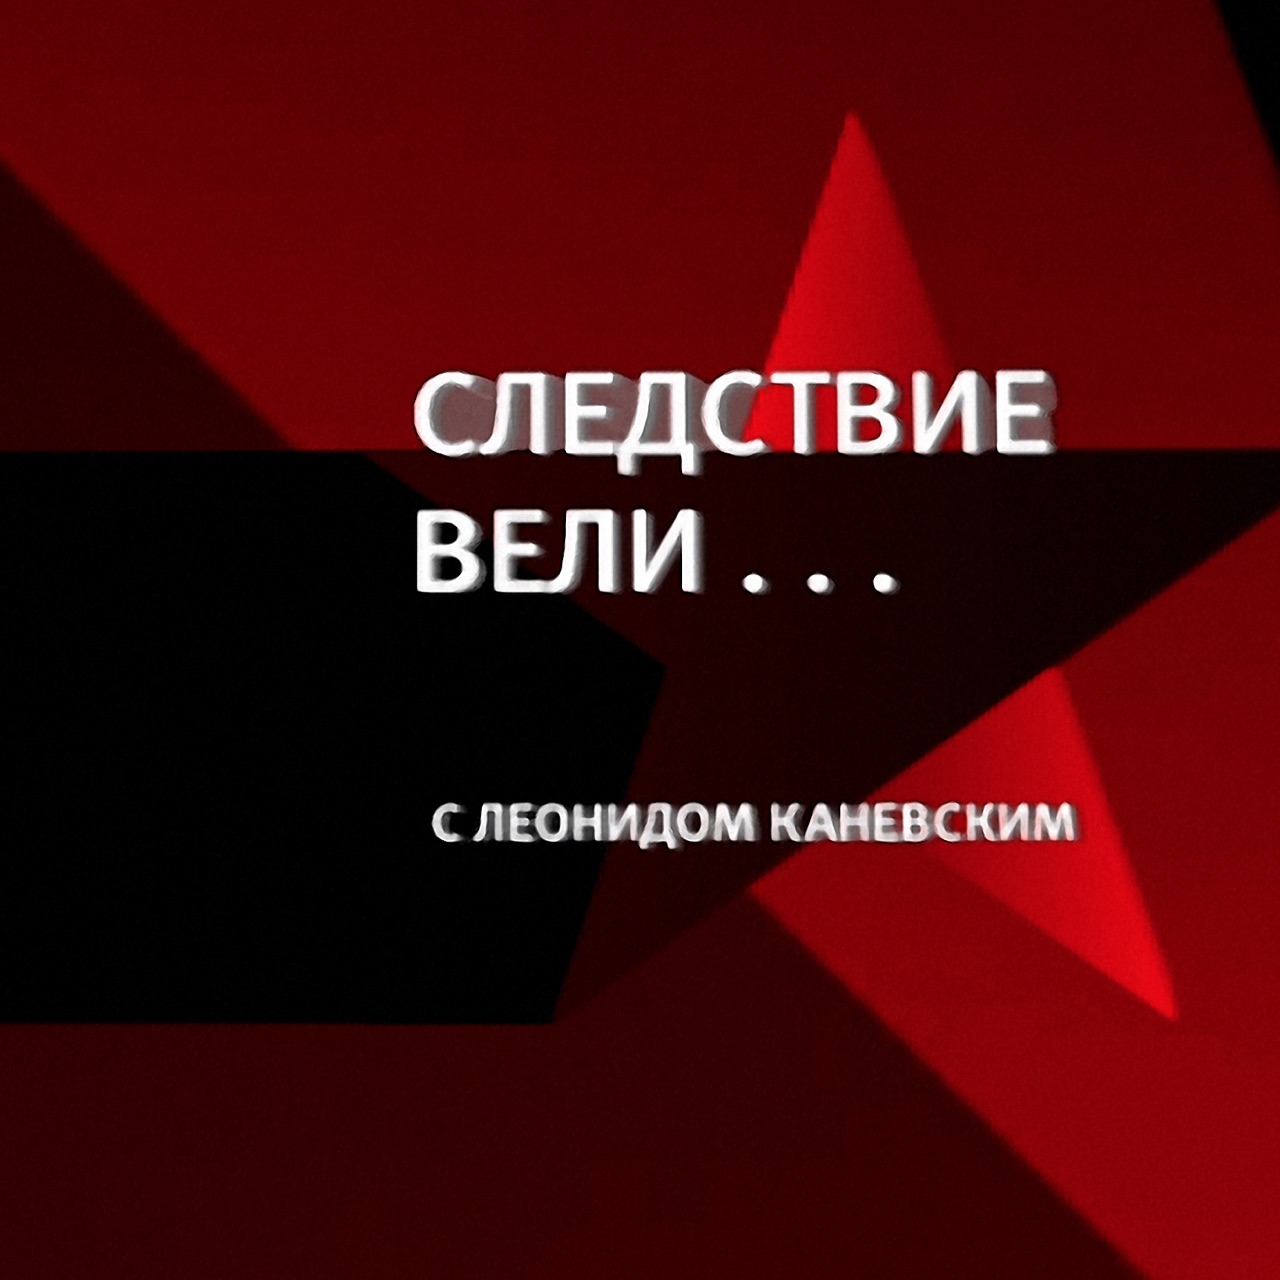 Видео следствие вели с леонидом каневским. Следствие вели с Леонидом Каневским логотип. Программа следствие вели с Леонидом Каневским.